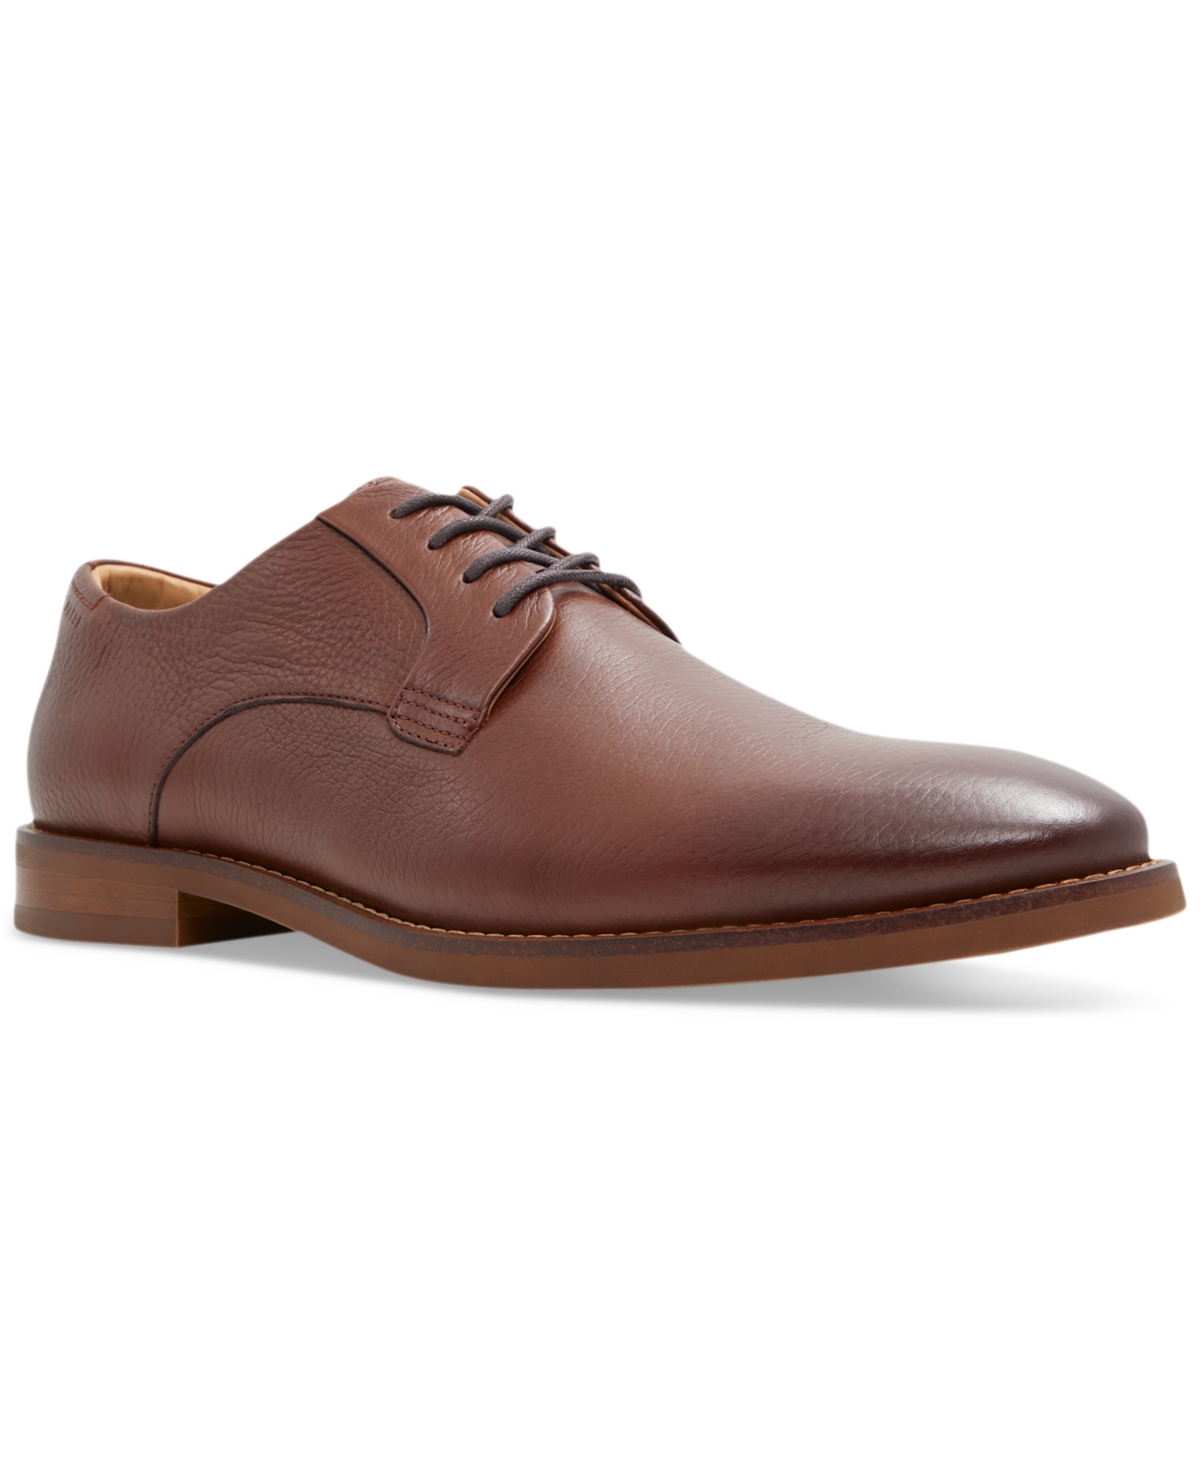 Men's Regent Dress Shoes - Brown